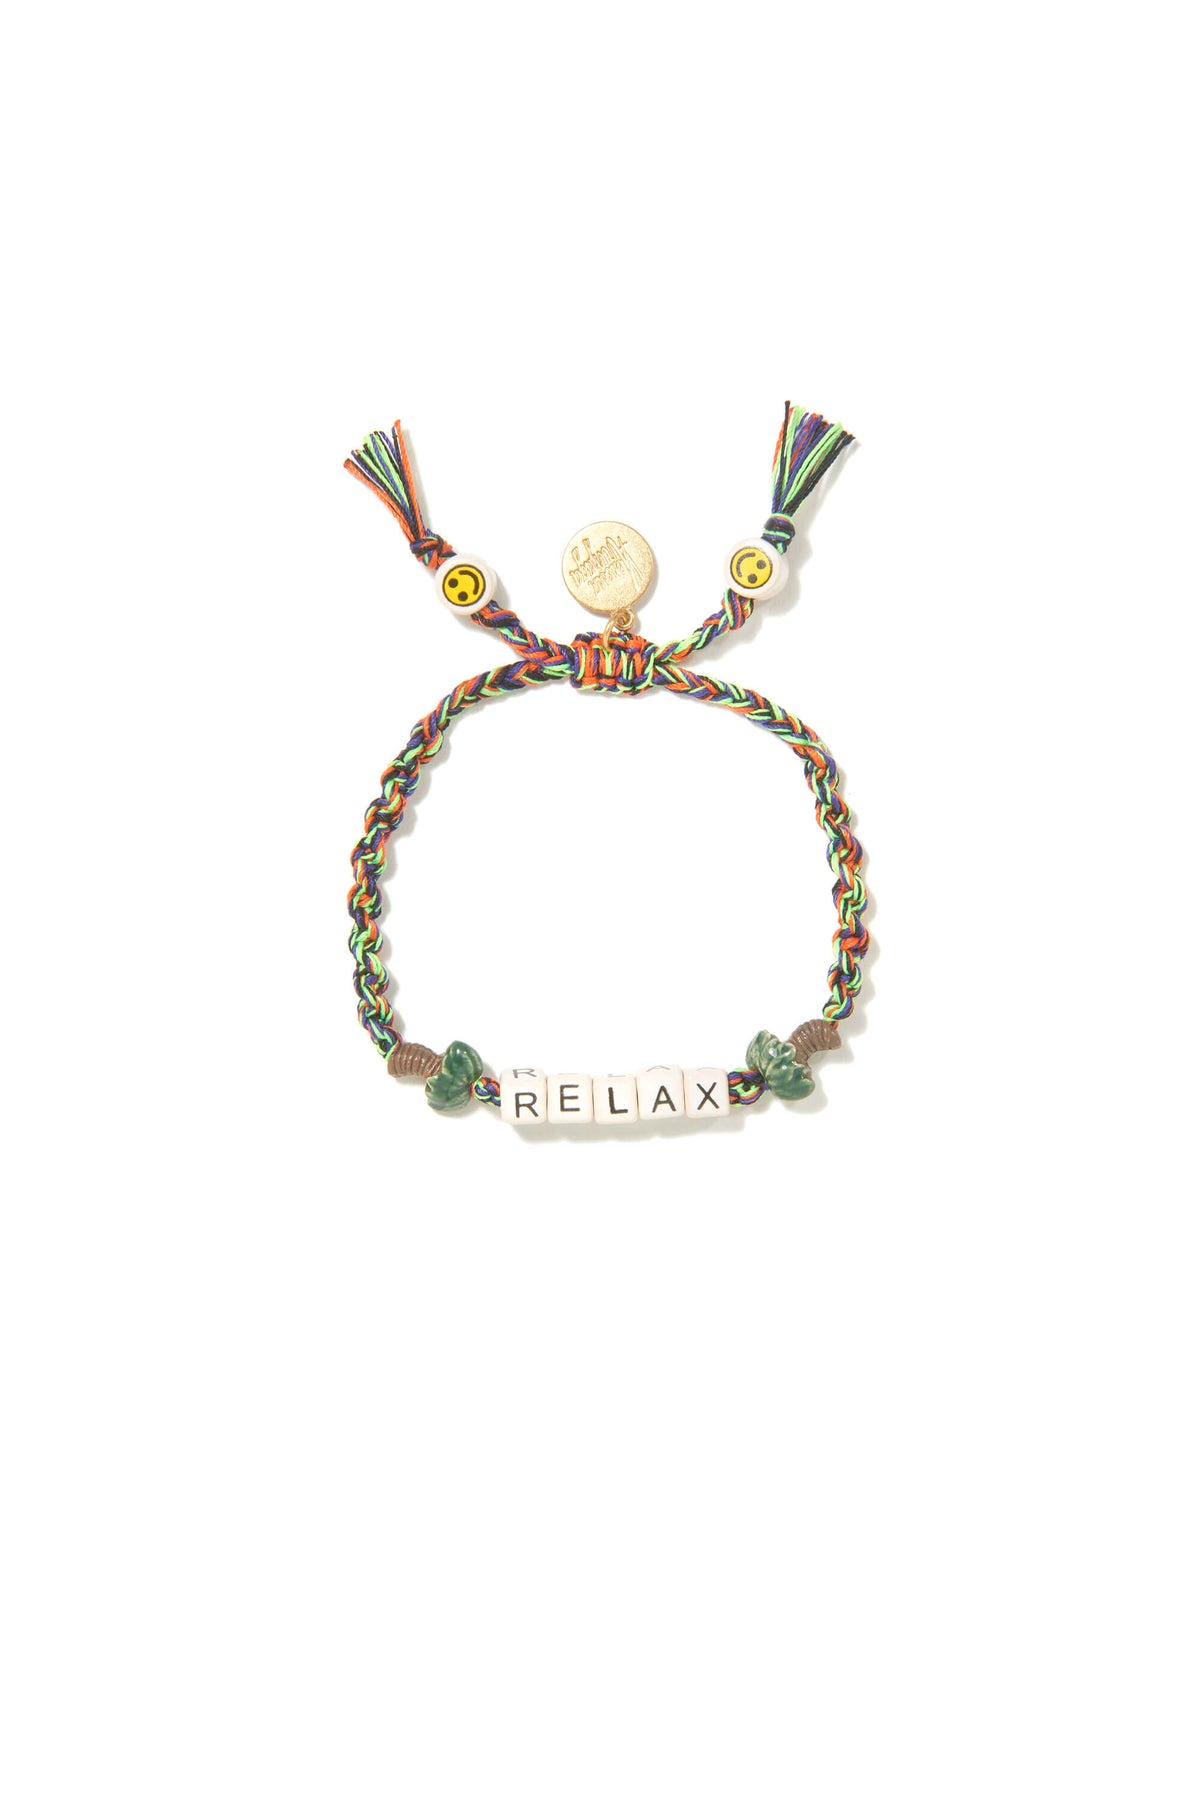 VA Relax bracelet in rainbow with gold